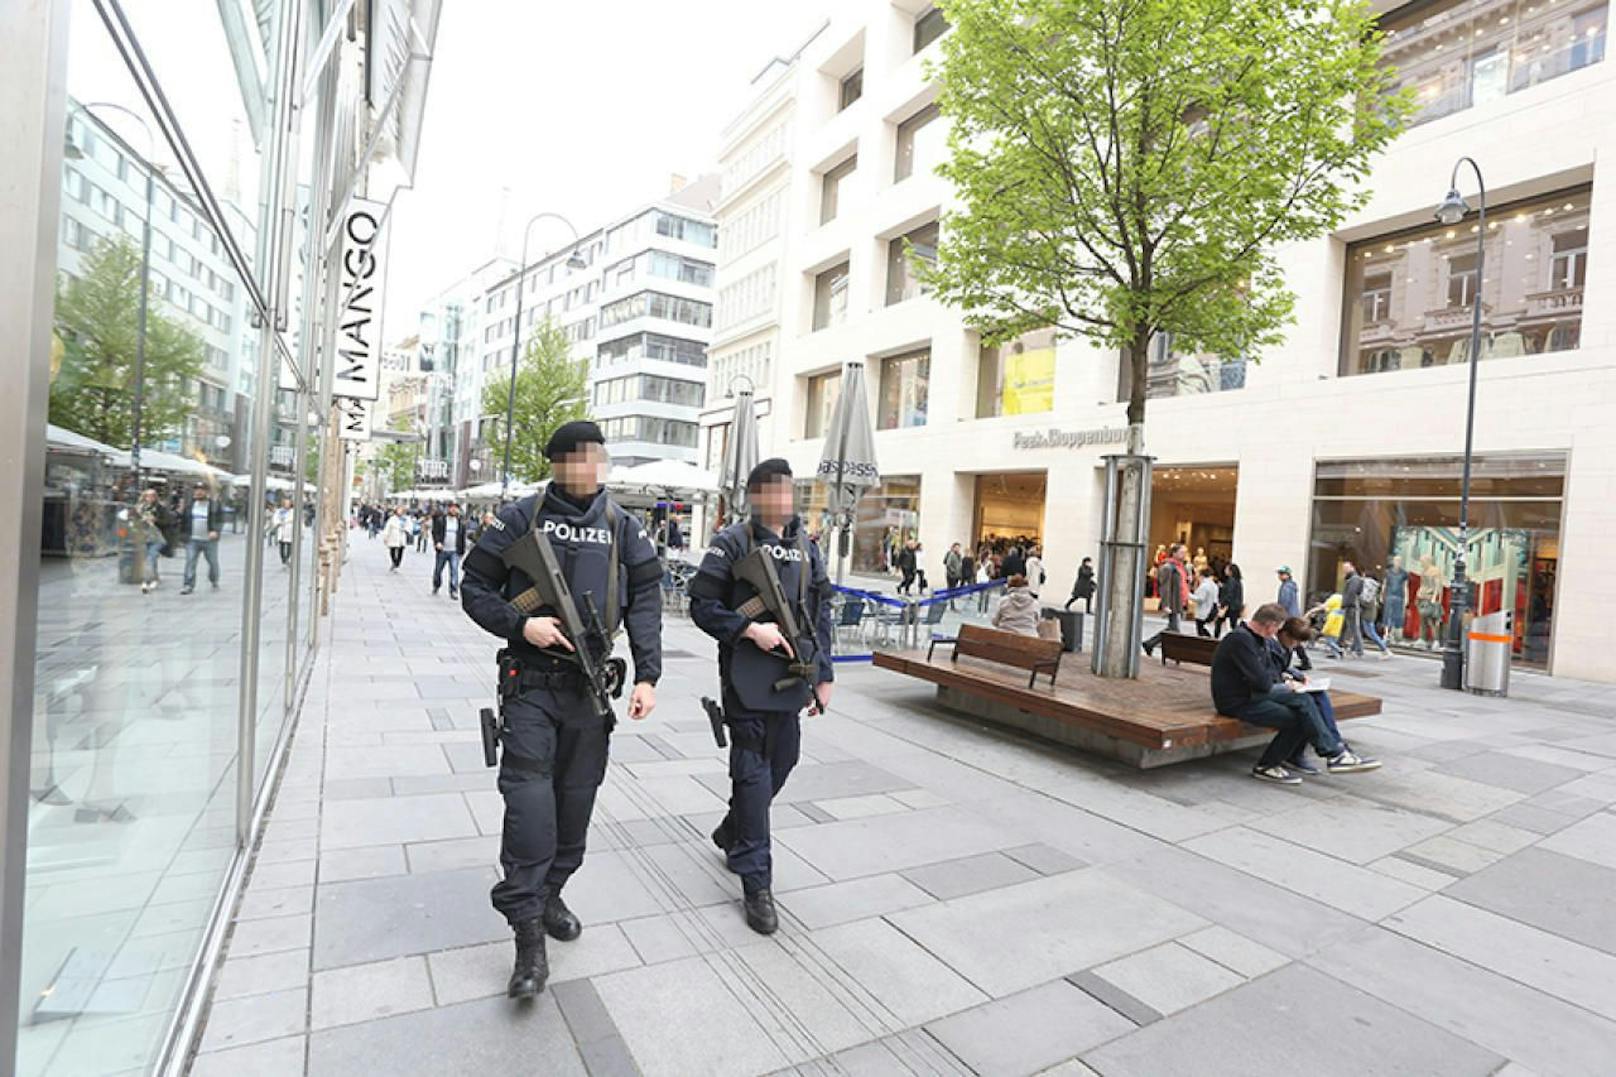 Anti-Terror-Einsatz auf Wiener Ostermärkten